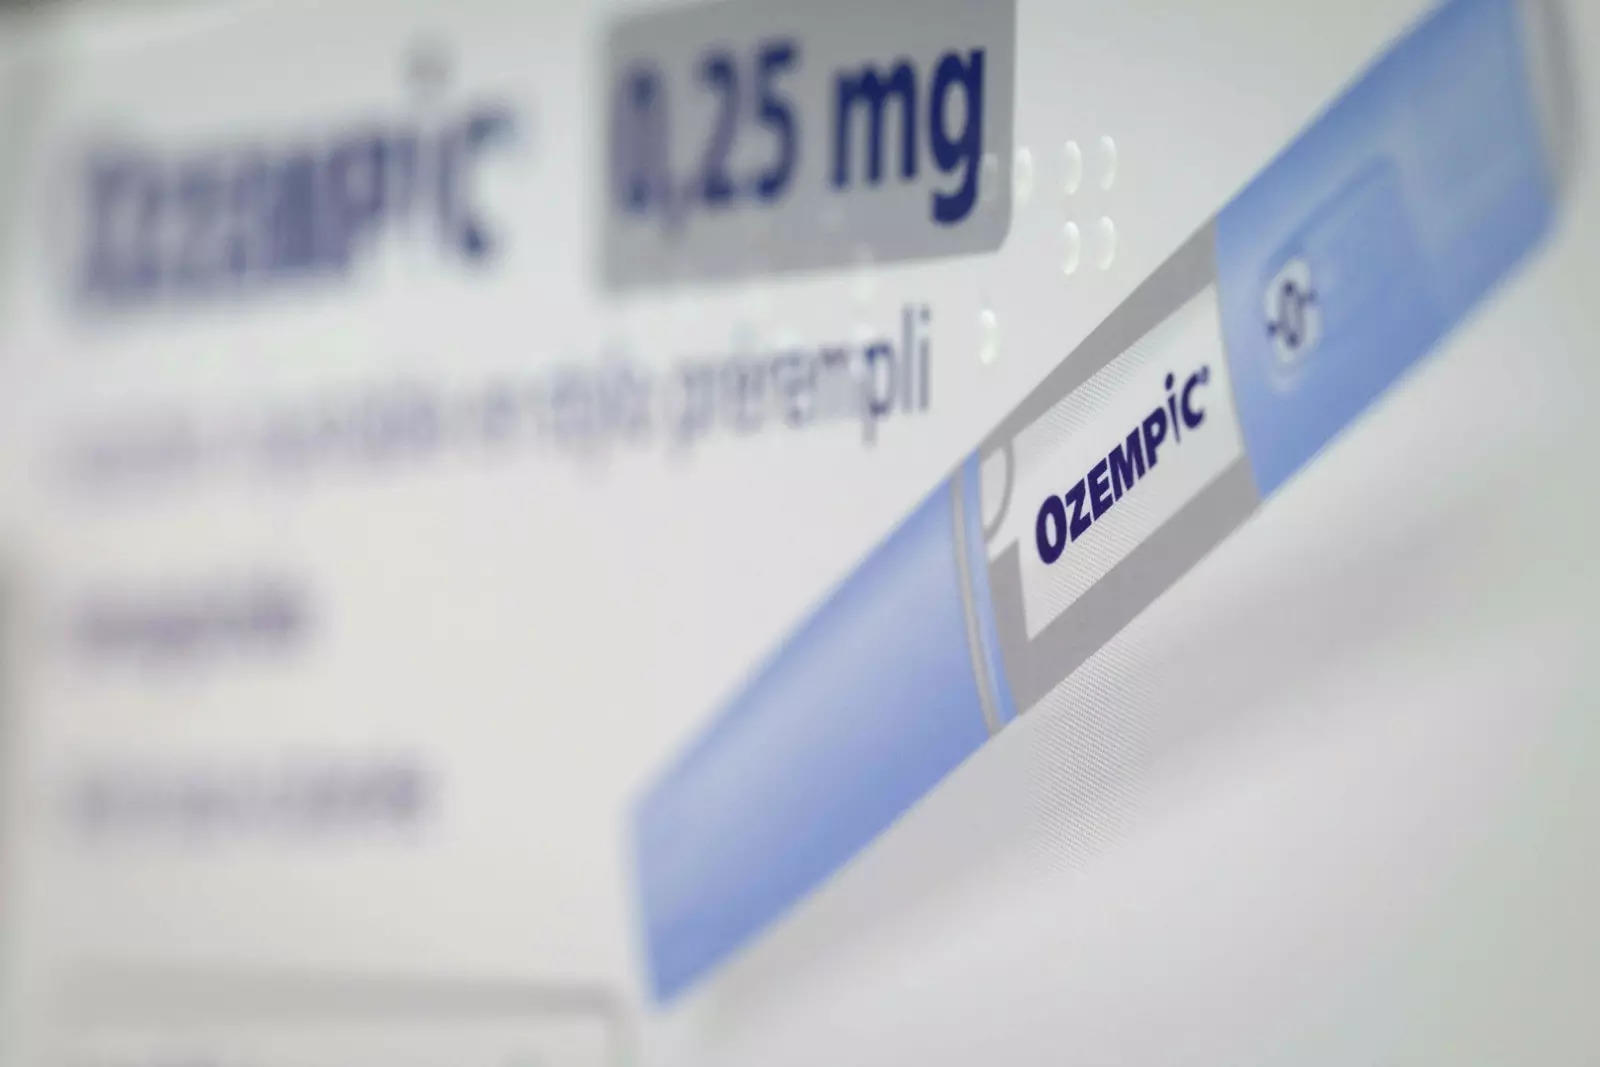 Novo Nordisk's diabetes drug Ozempic back in supply in US after months of shortage